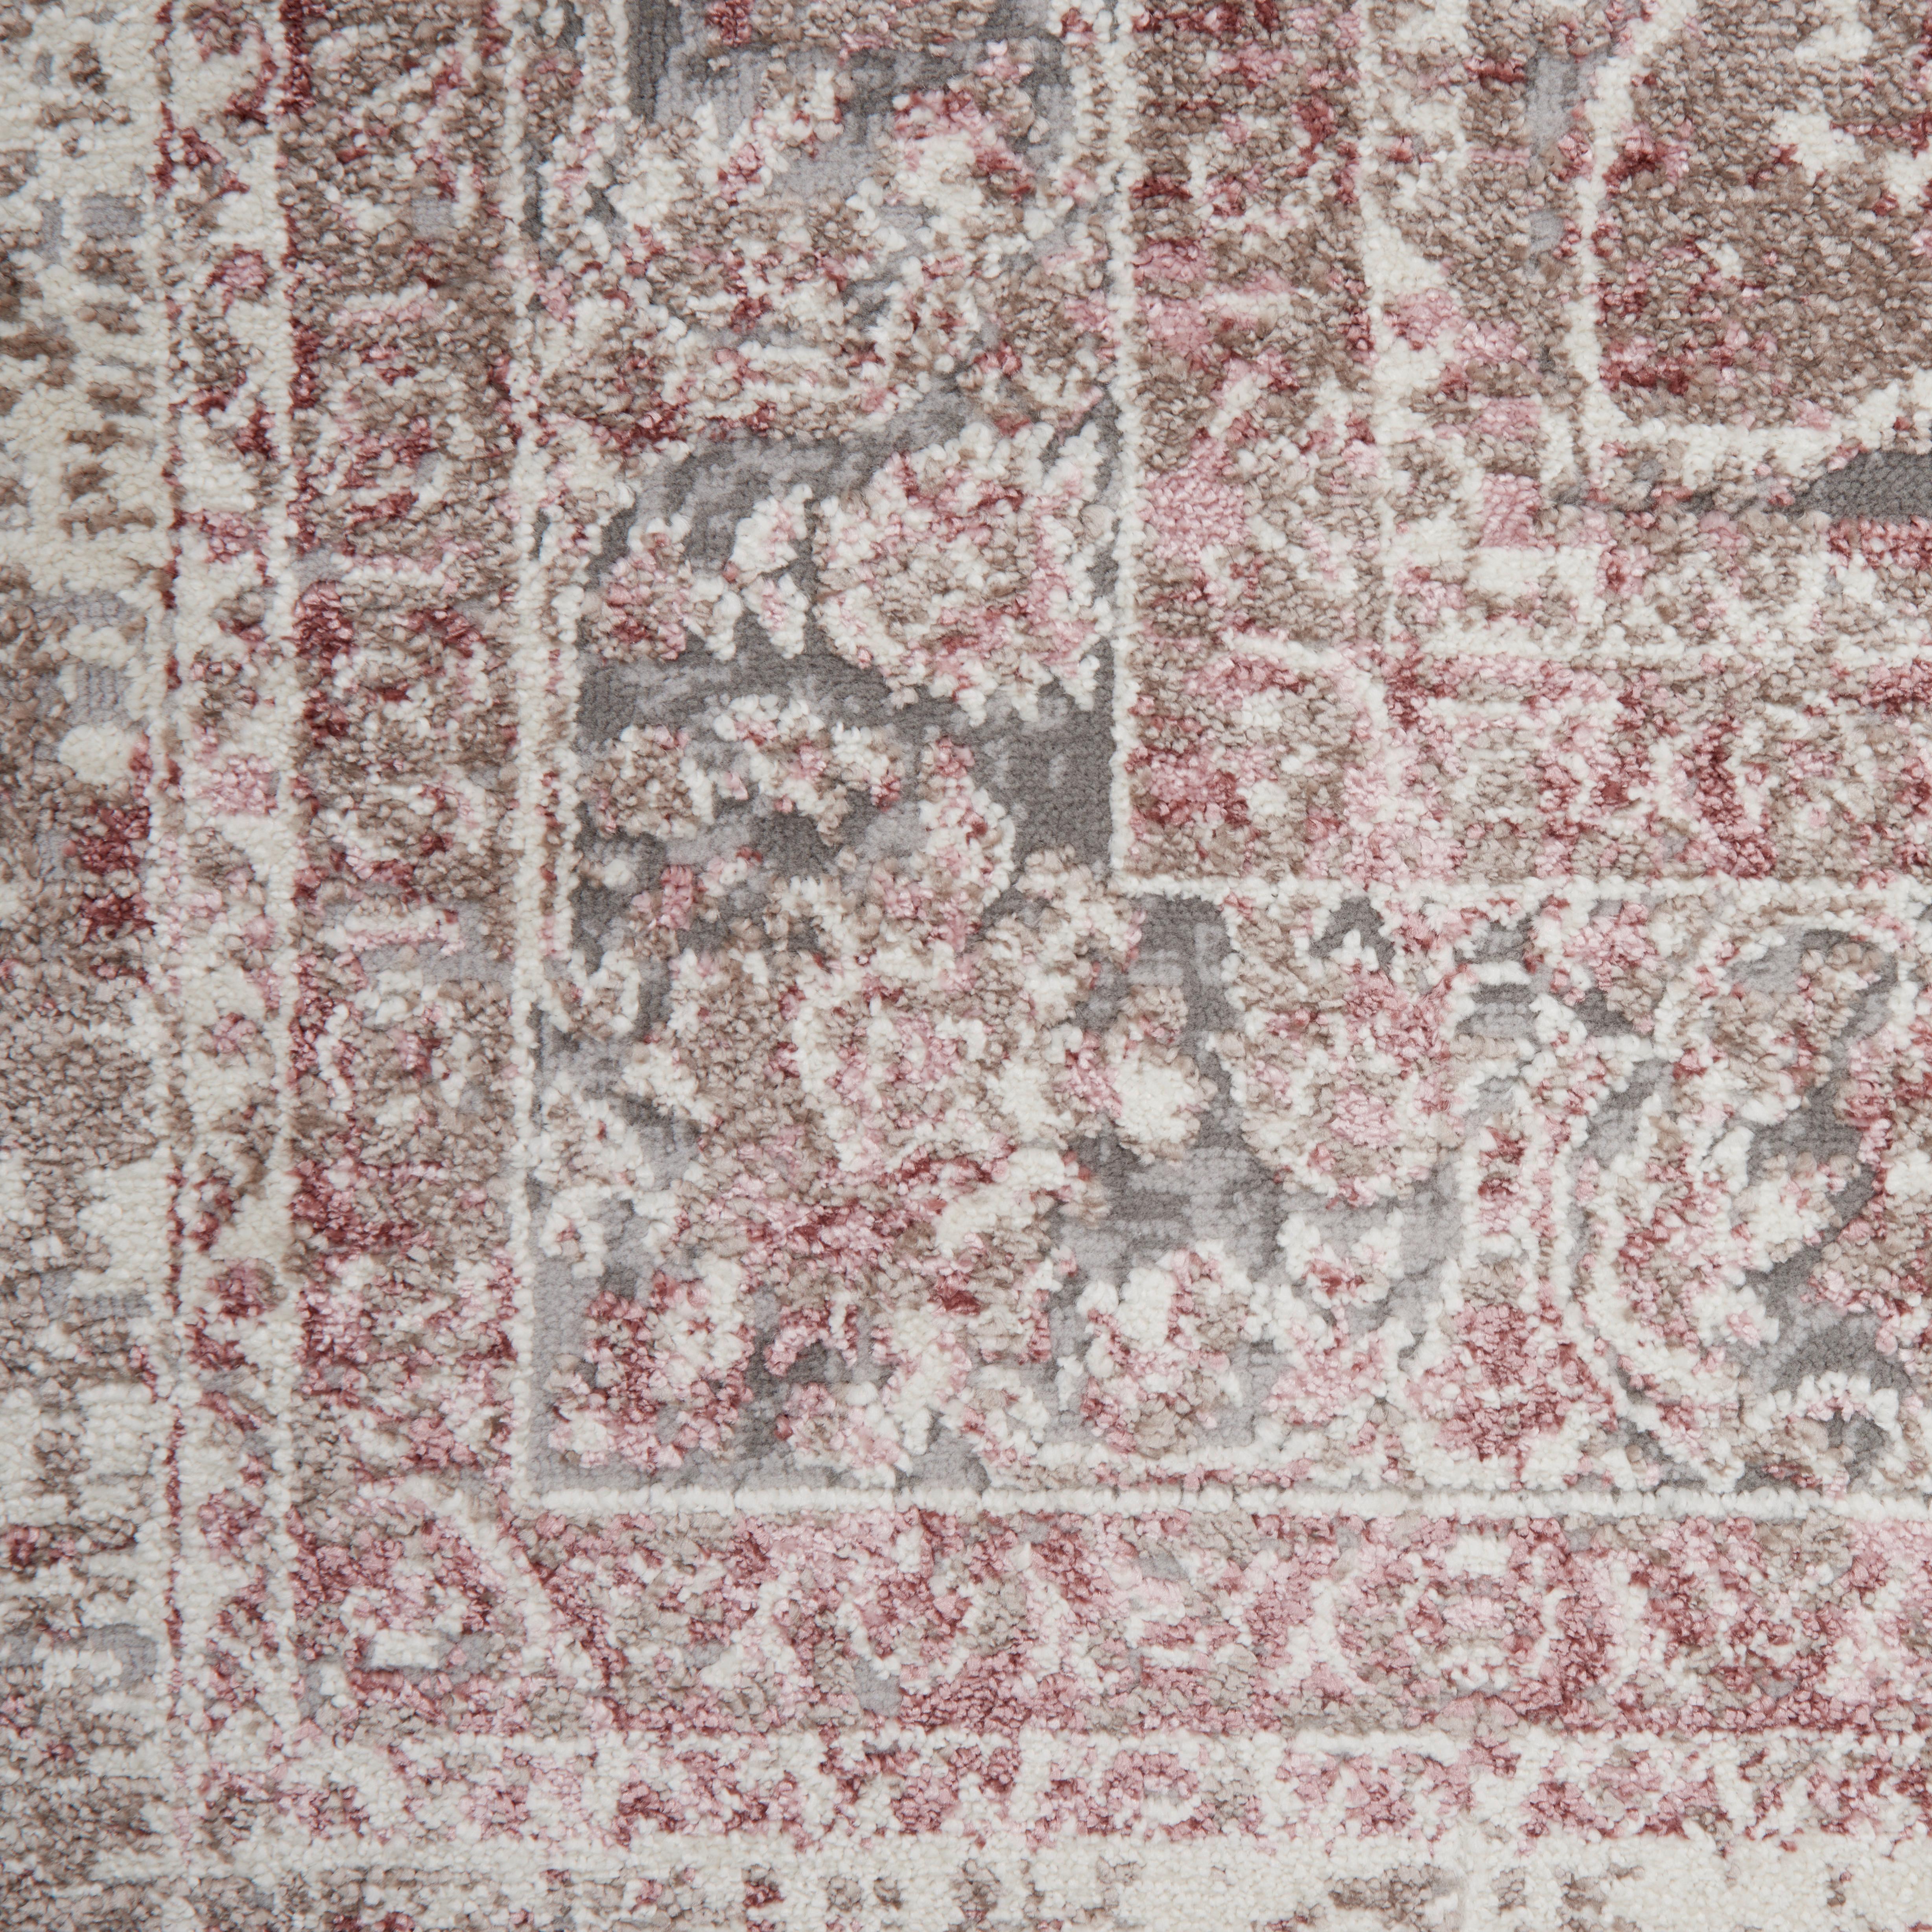 Tkaný Koberec Marcus 1, 80/150cm, Ružová - ružová, textil (80/150cm) - Modern Living